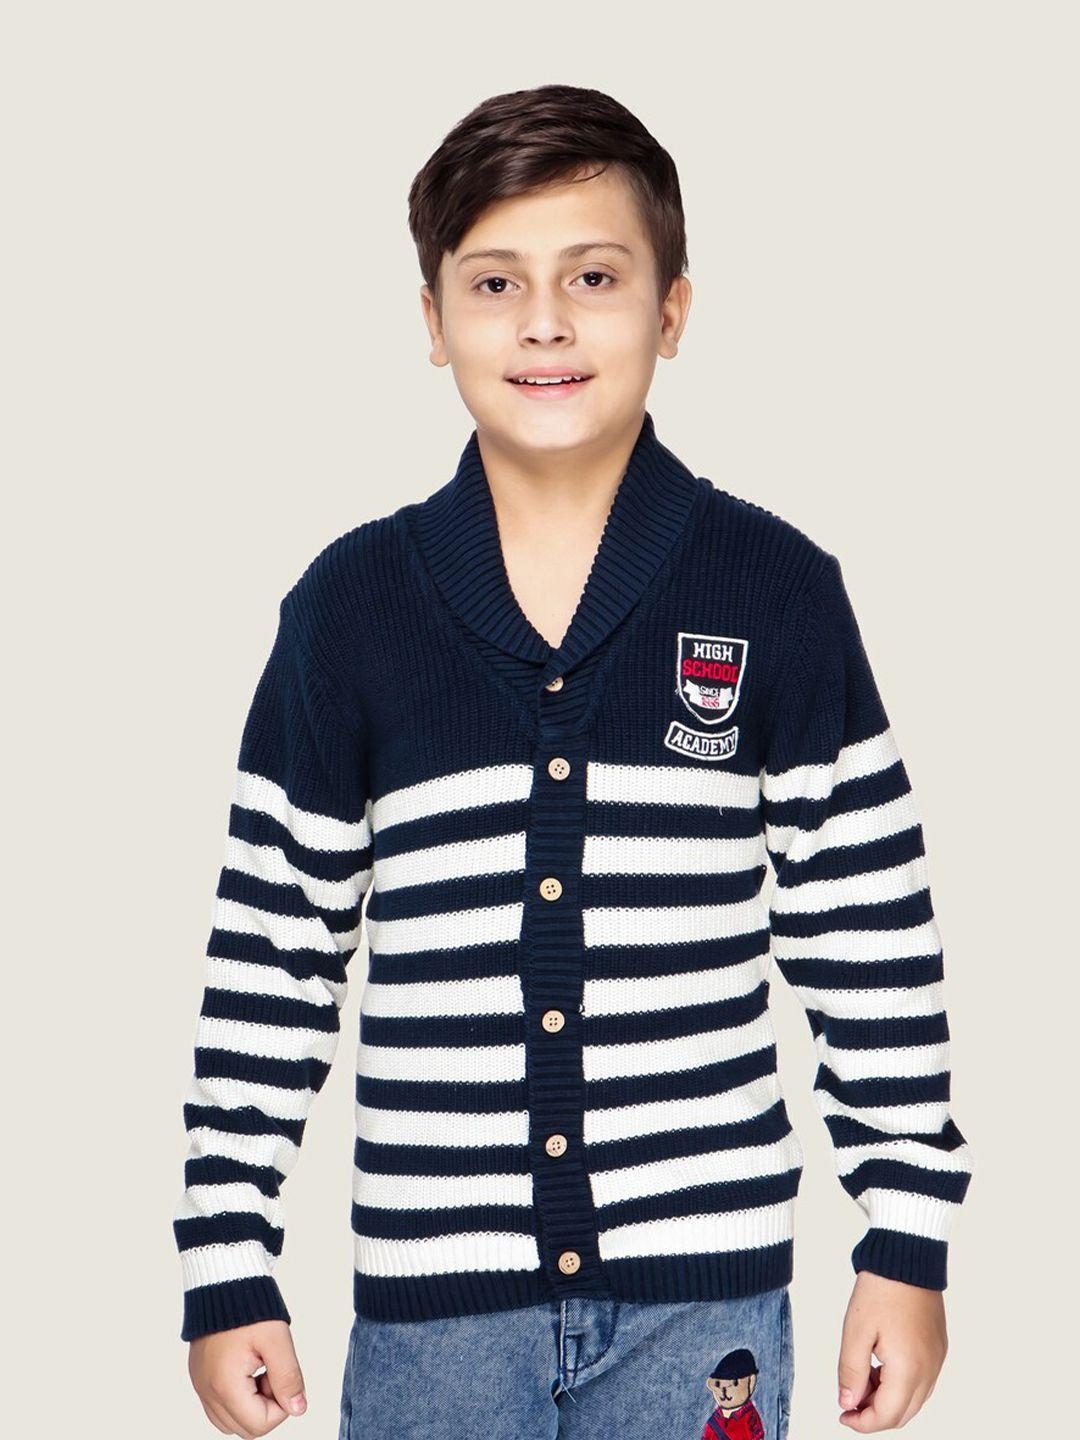 lasnak boys navy blue & white striped cardigan cotton sweater